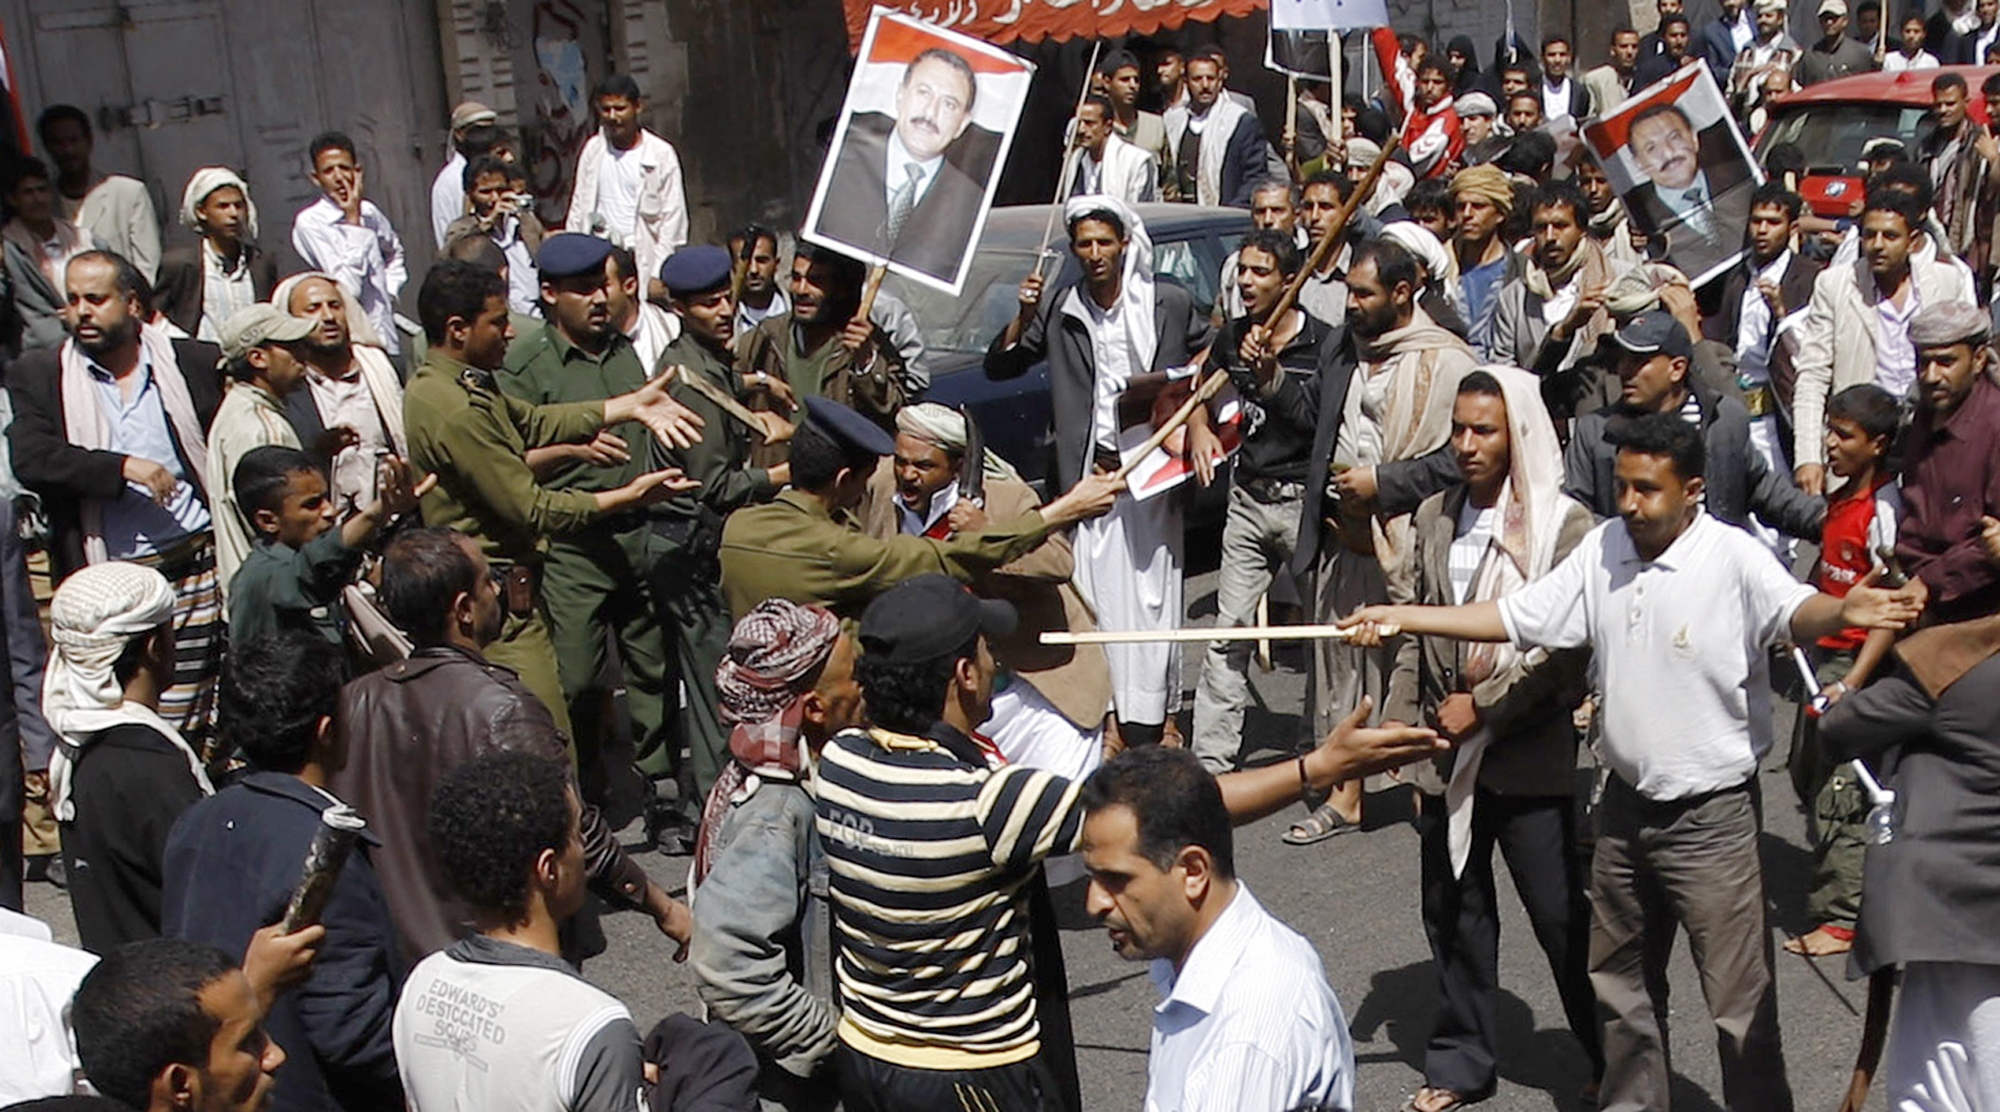 Demonstration, Mellanöstern, Uppror, Jemen, Tunisien